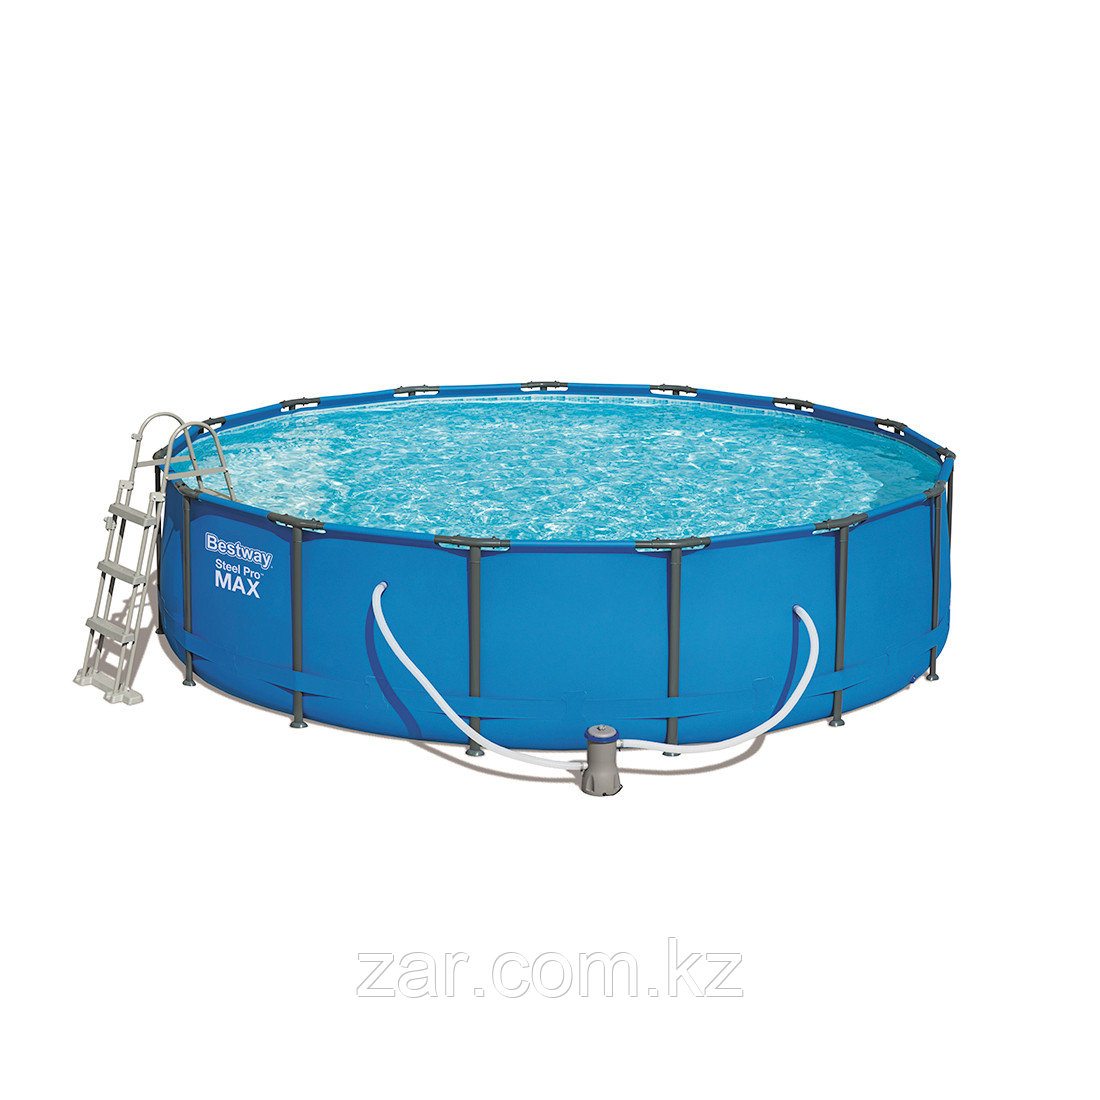 Каркасный бассейн Bestway 56488, Steel Pro MAX 457 х 107 см